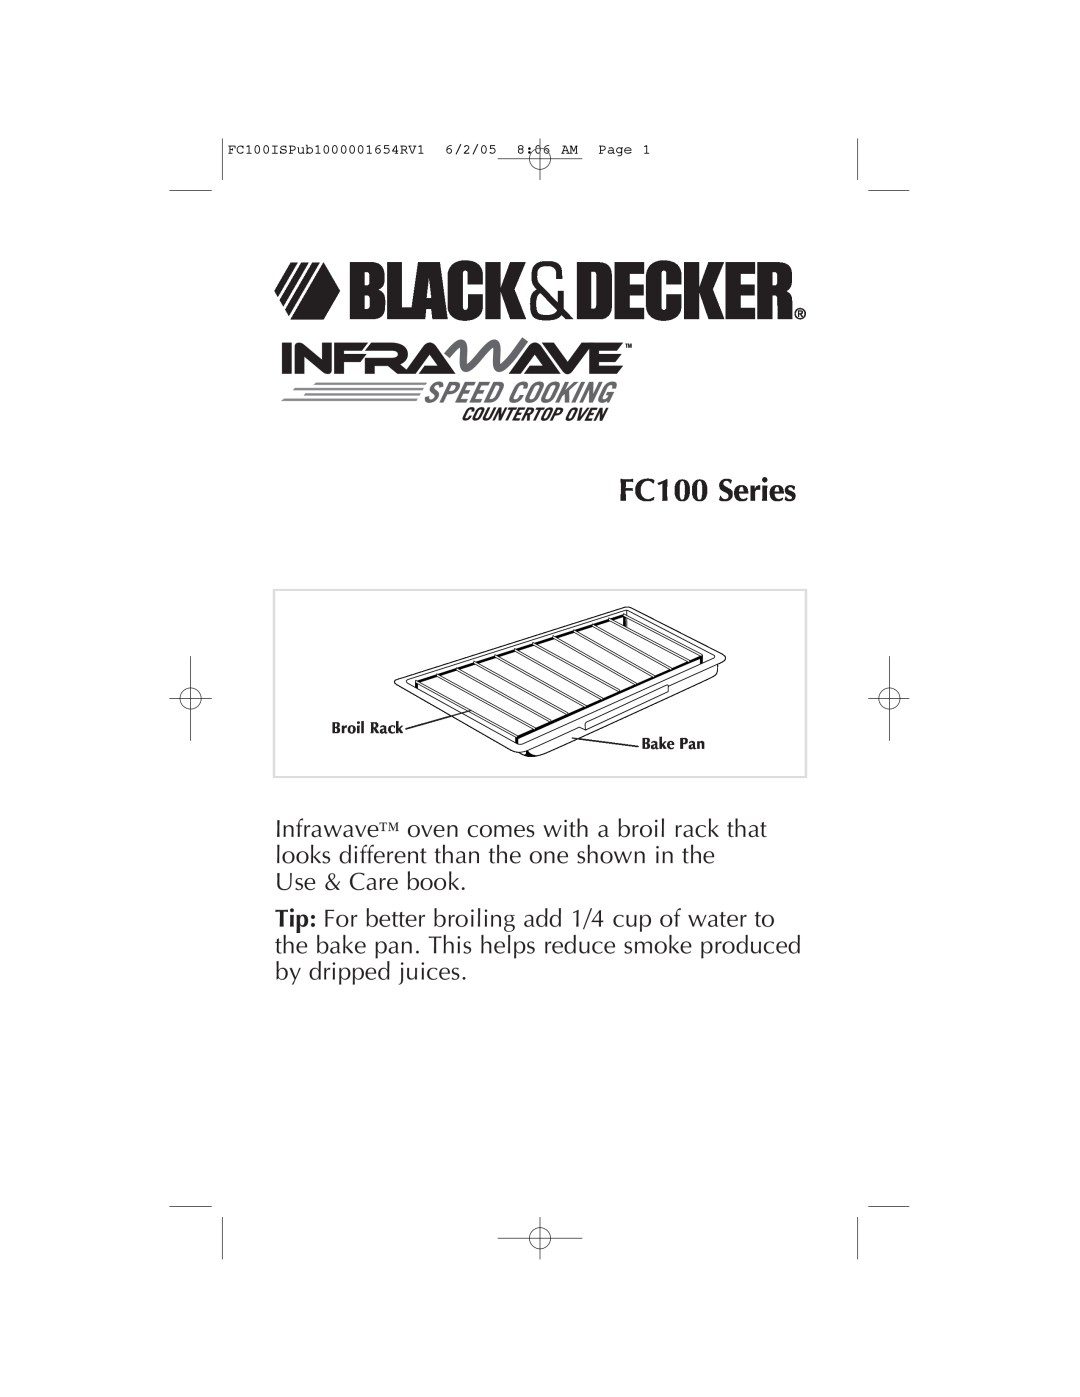 Black & Decker manual FC100 Series, Broil Rack Bake Pan 